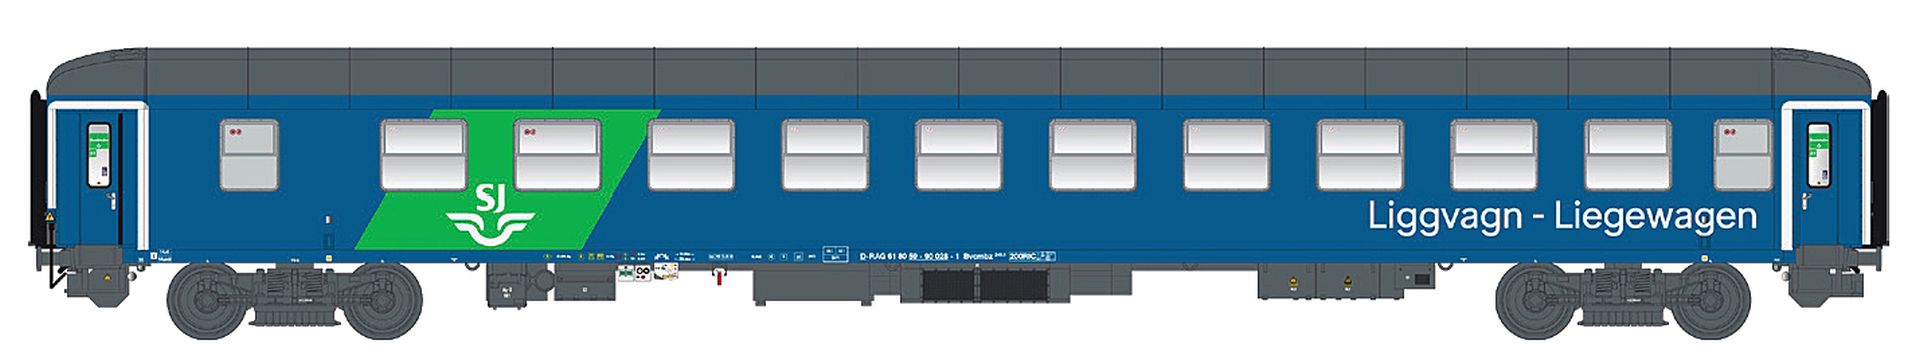 L.S. Models 48095 - Liegewagen Bvcmbz 249.1, RDC/SJ, Ep.VI, EN 346, 2. BN